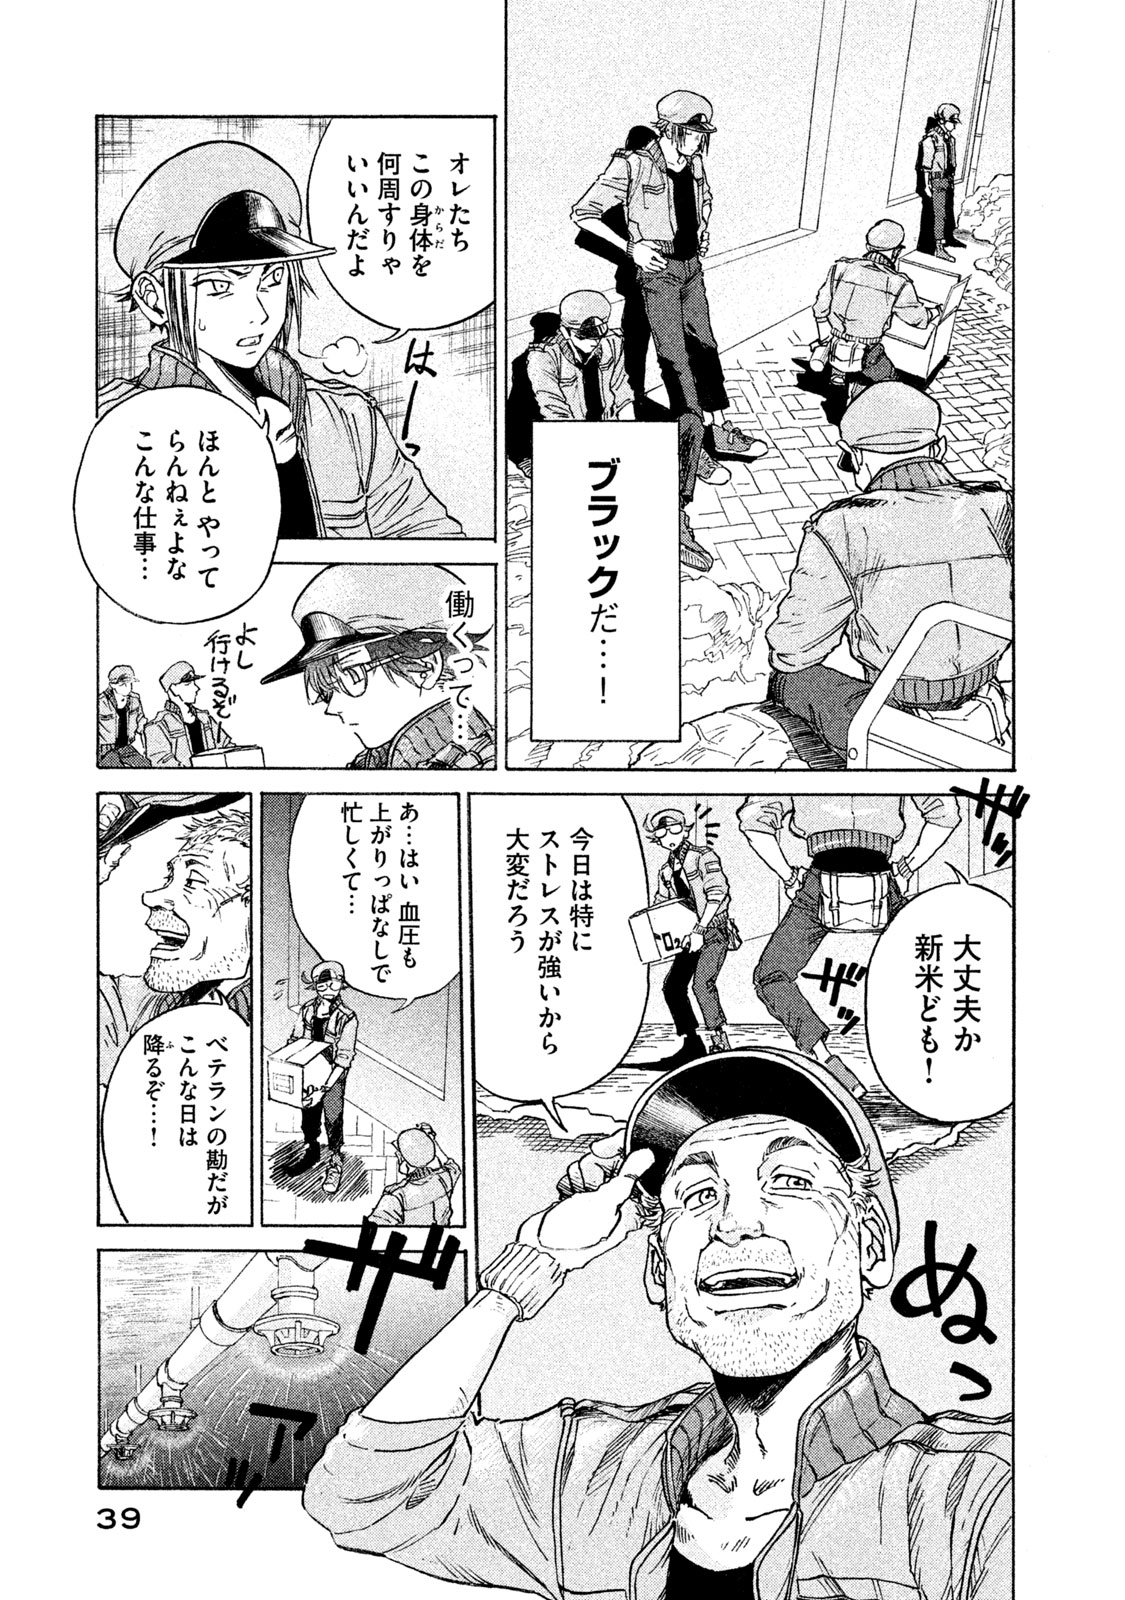 Hataraku Saibou BLACK - Chapter 2 - Page 3